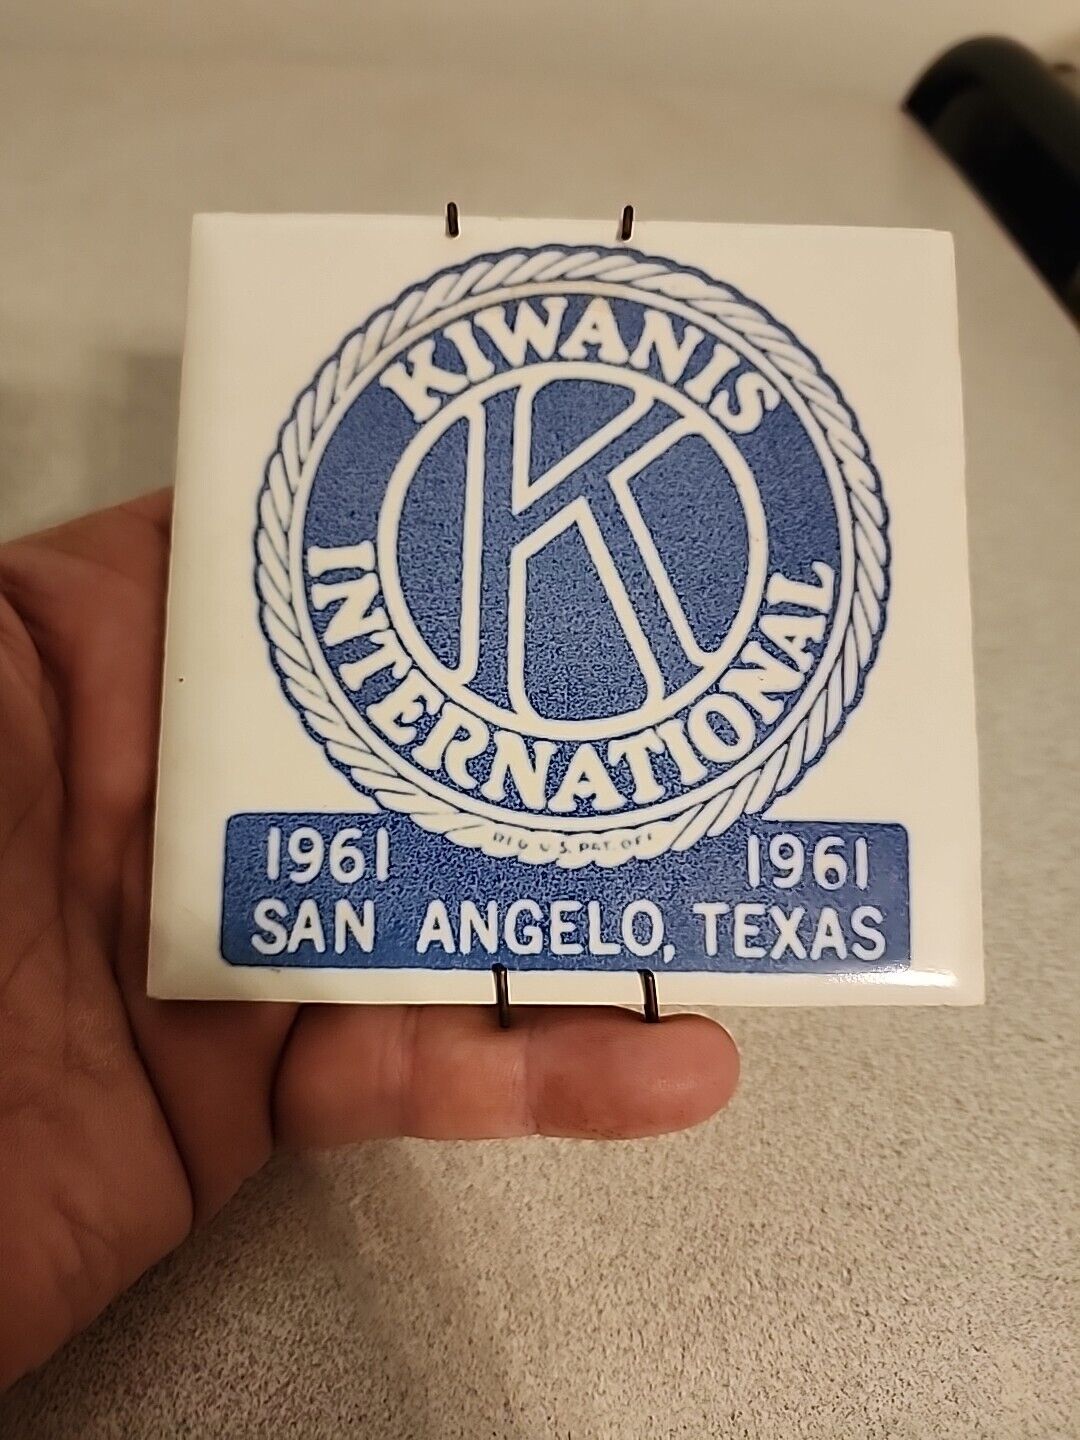 KIWANIS INTERNATIONAL 1961 SAN ANGELO, TEXAS Ceramic Tile Wall Hanging Decor